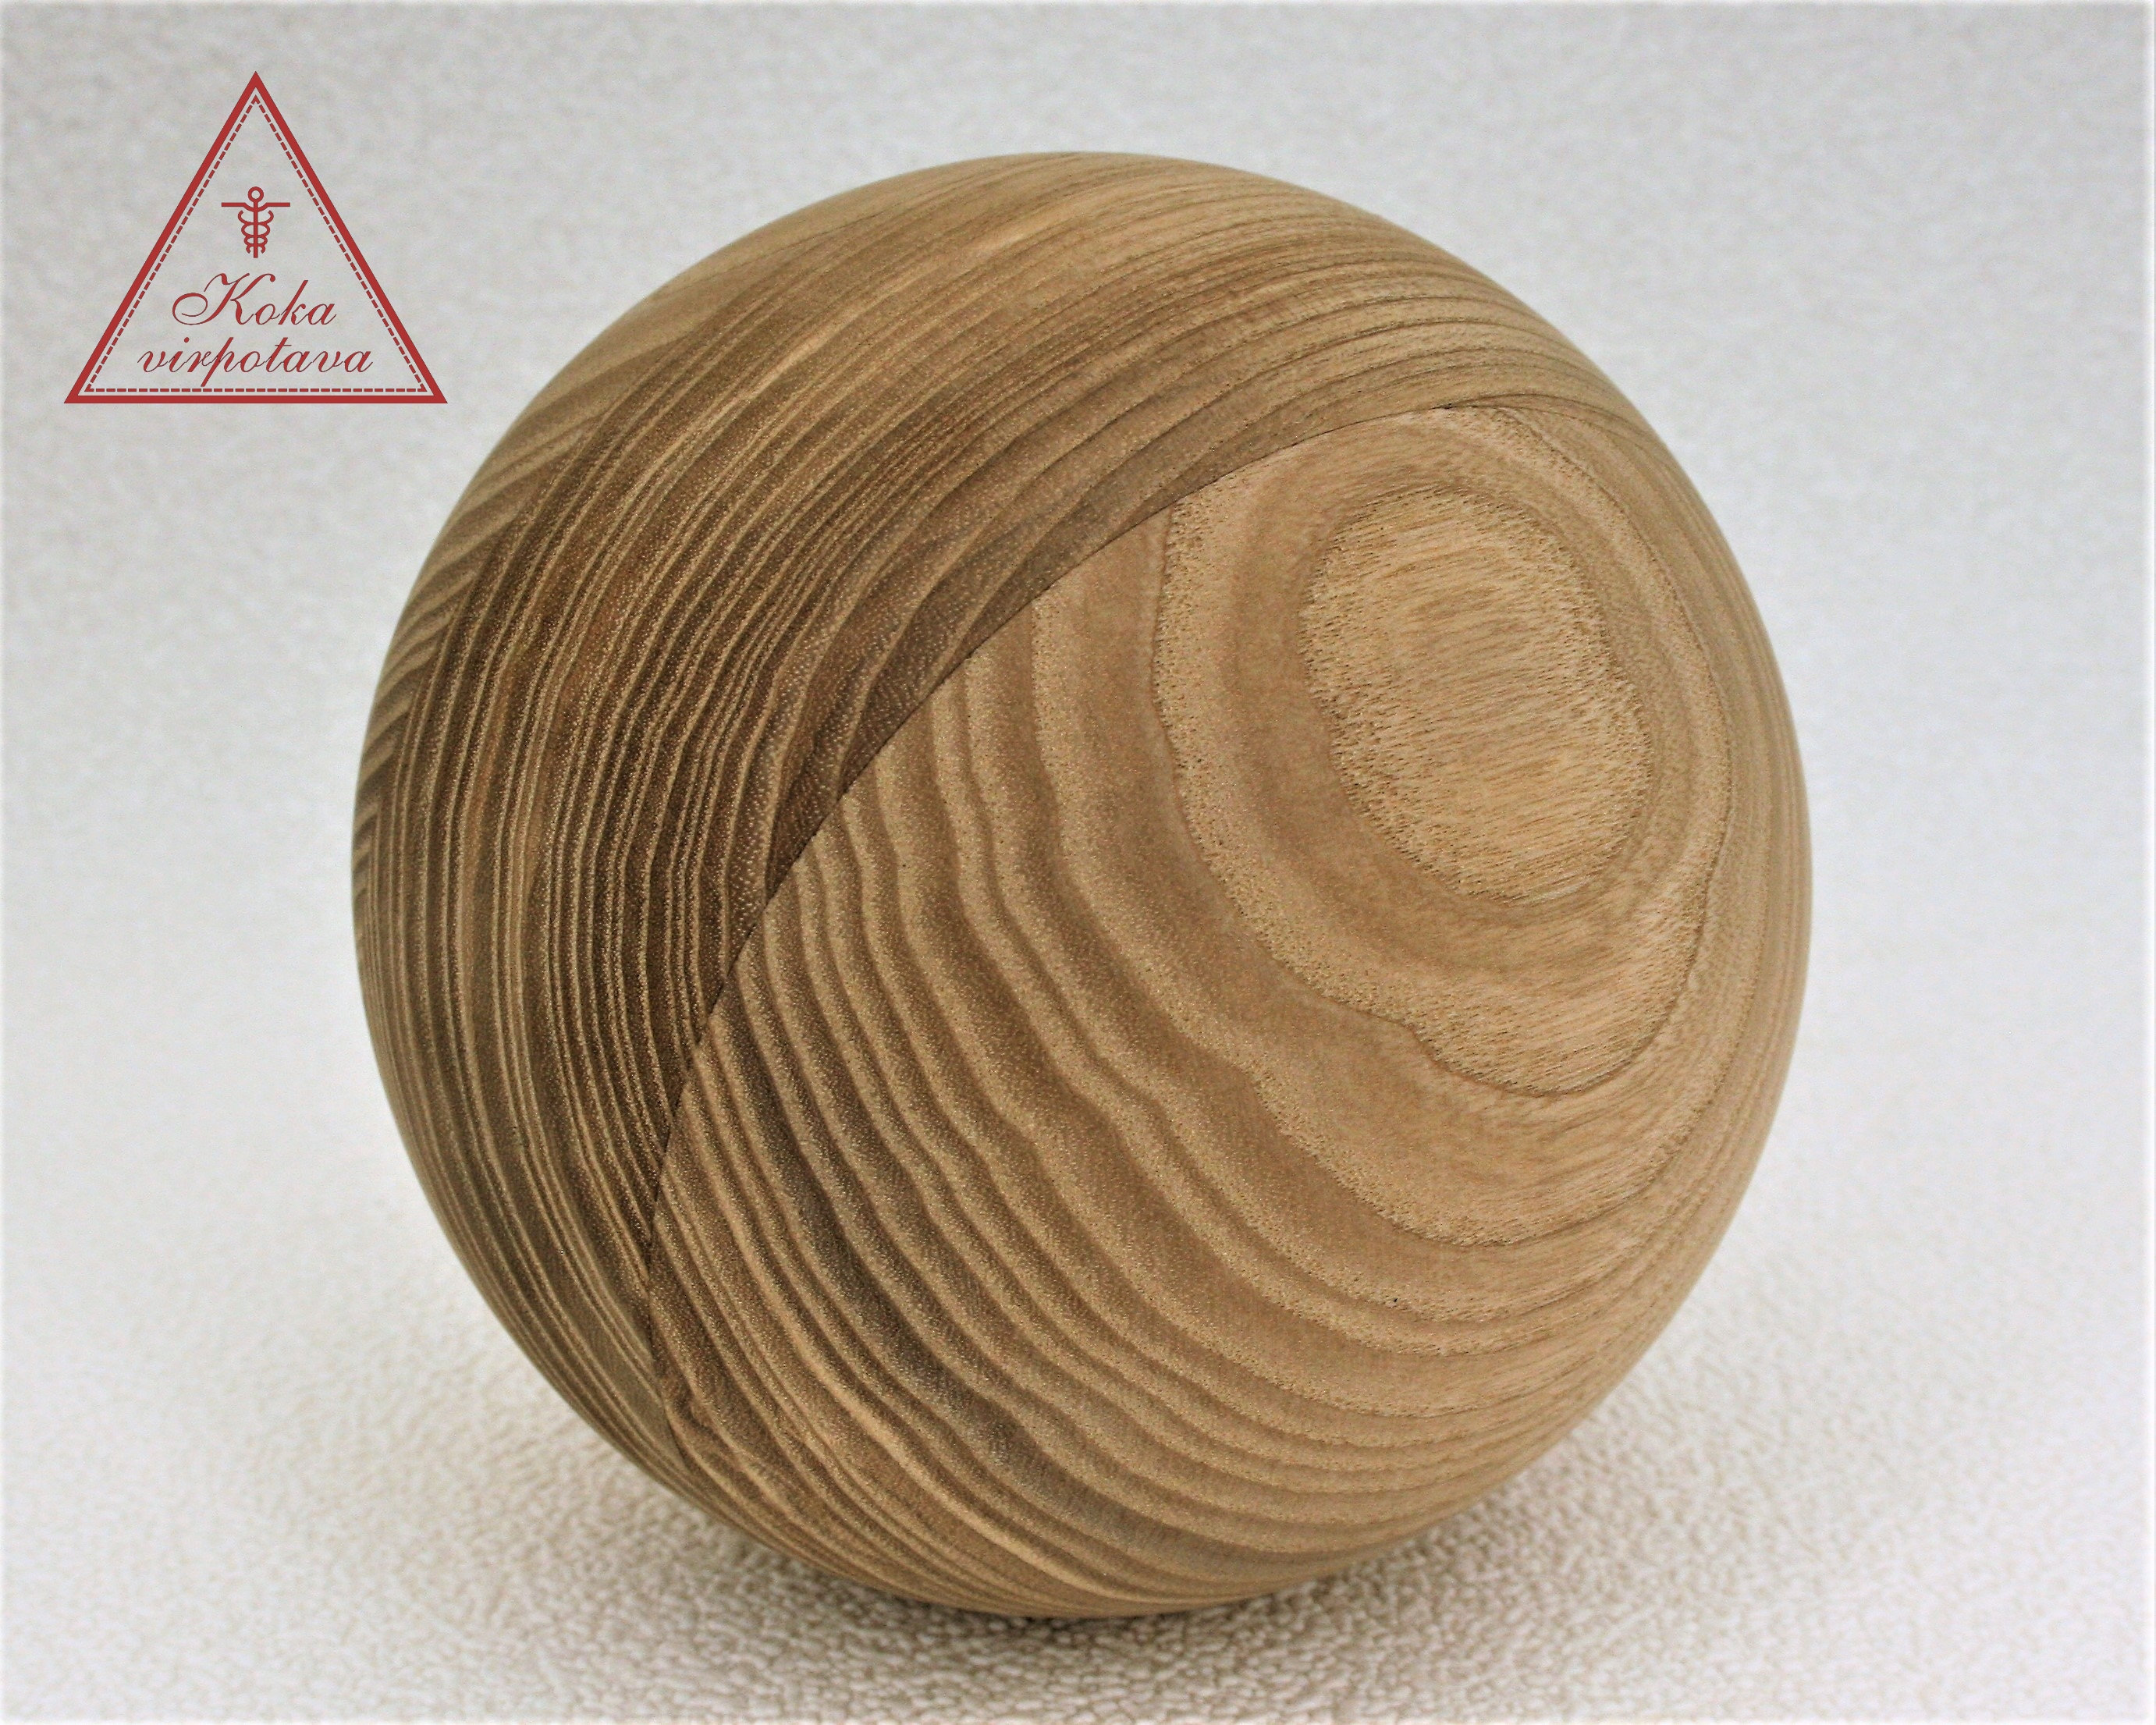 Wood Ball 120 Mm Large Wood Ball Wood Sphere 120 Mm Wood Ball 4,72